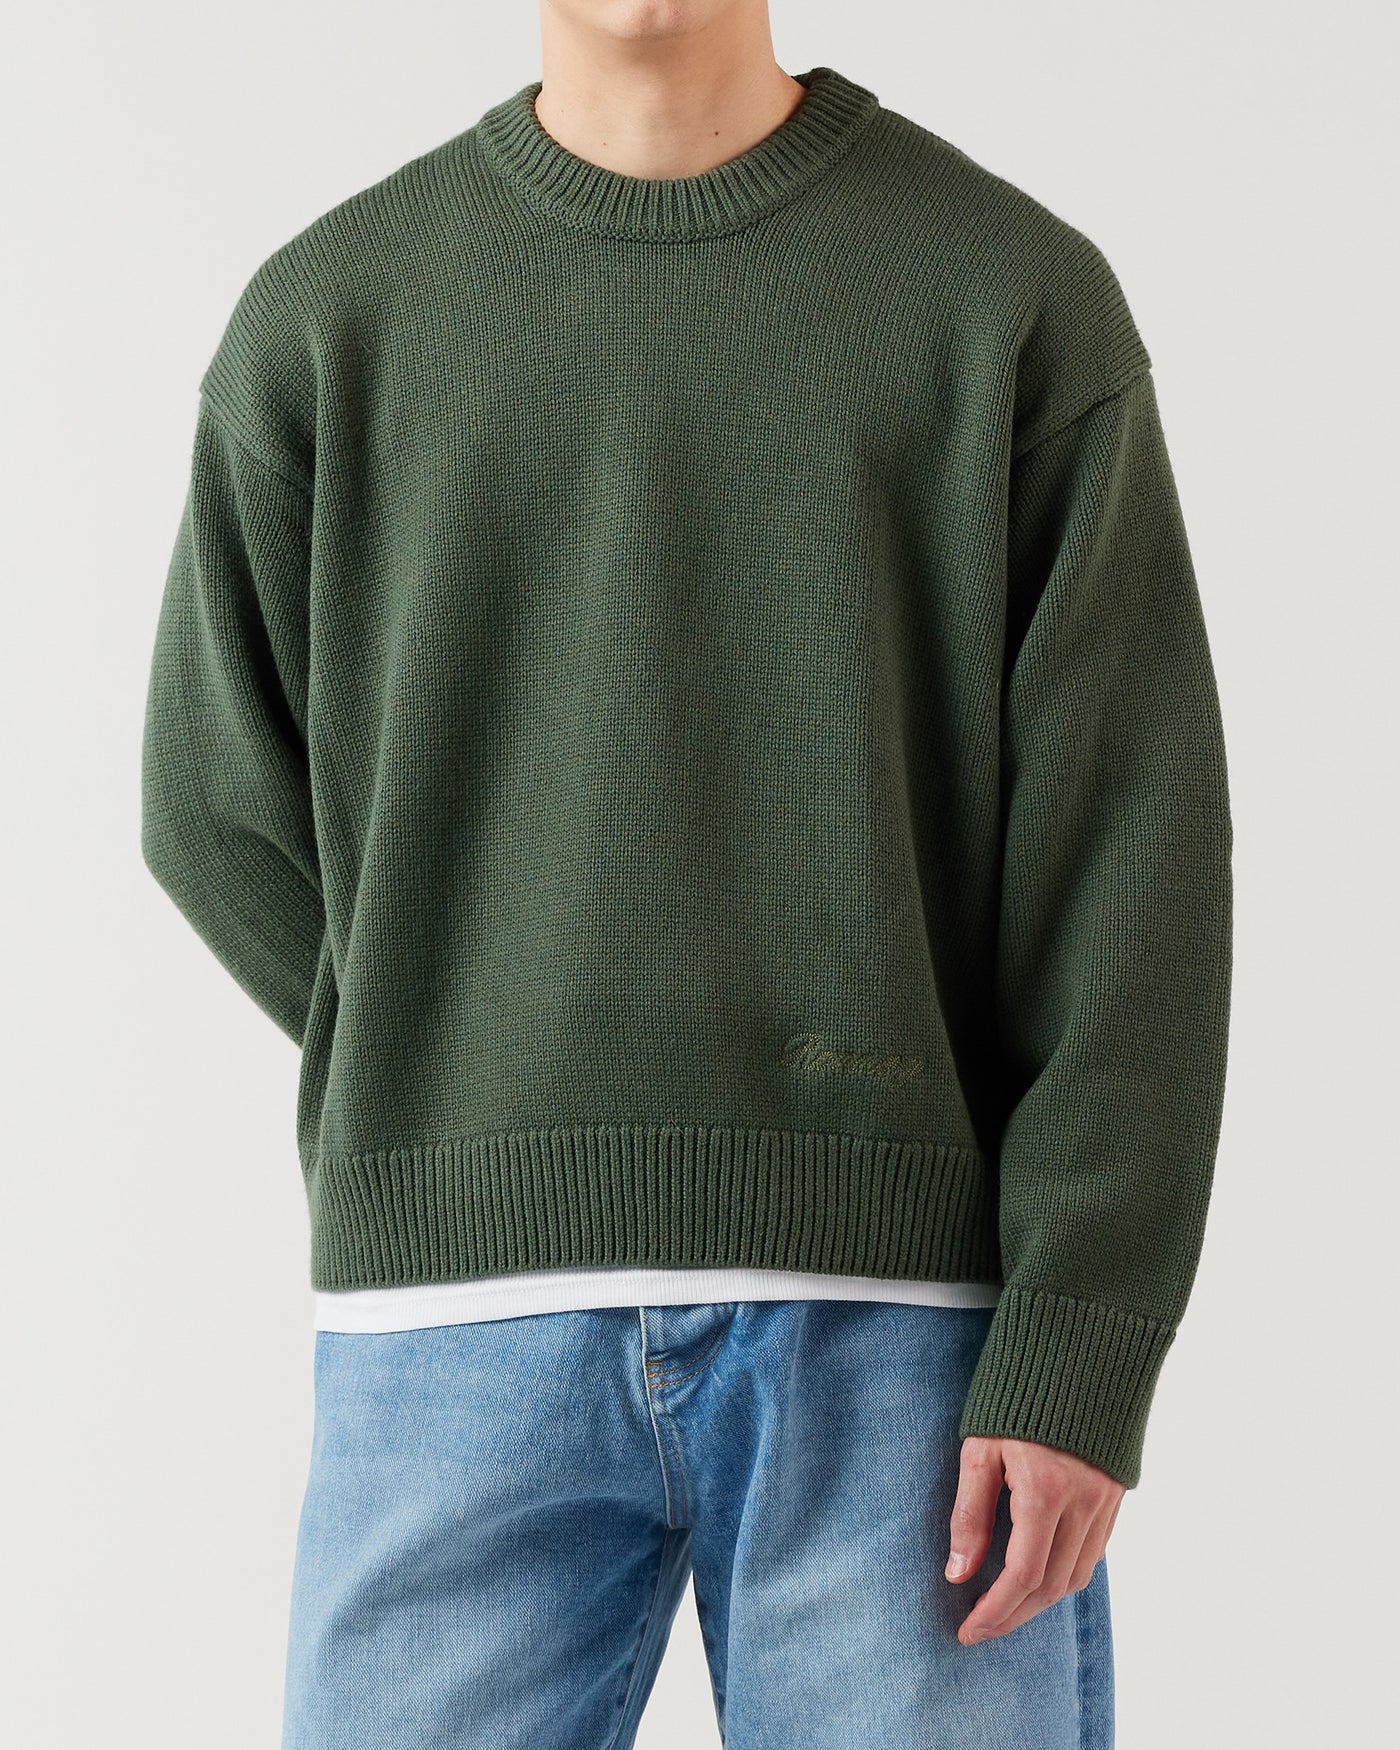 R Knit Sweater - Sage Green